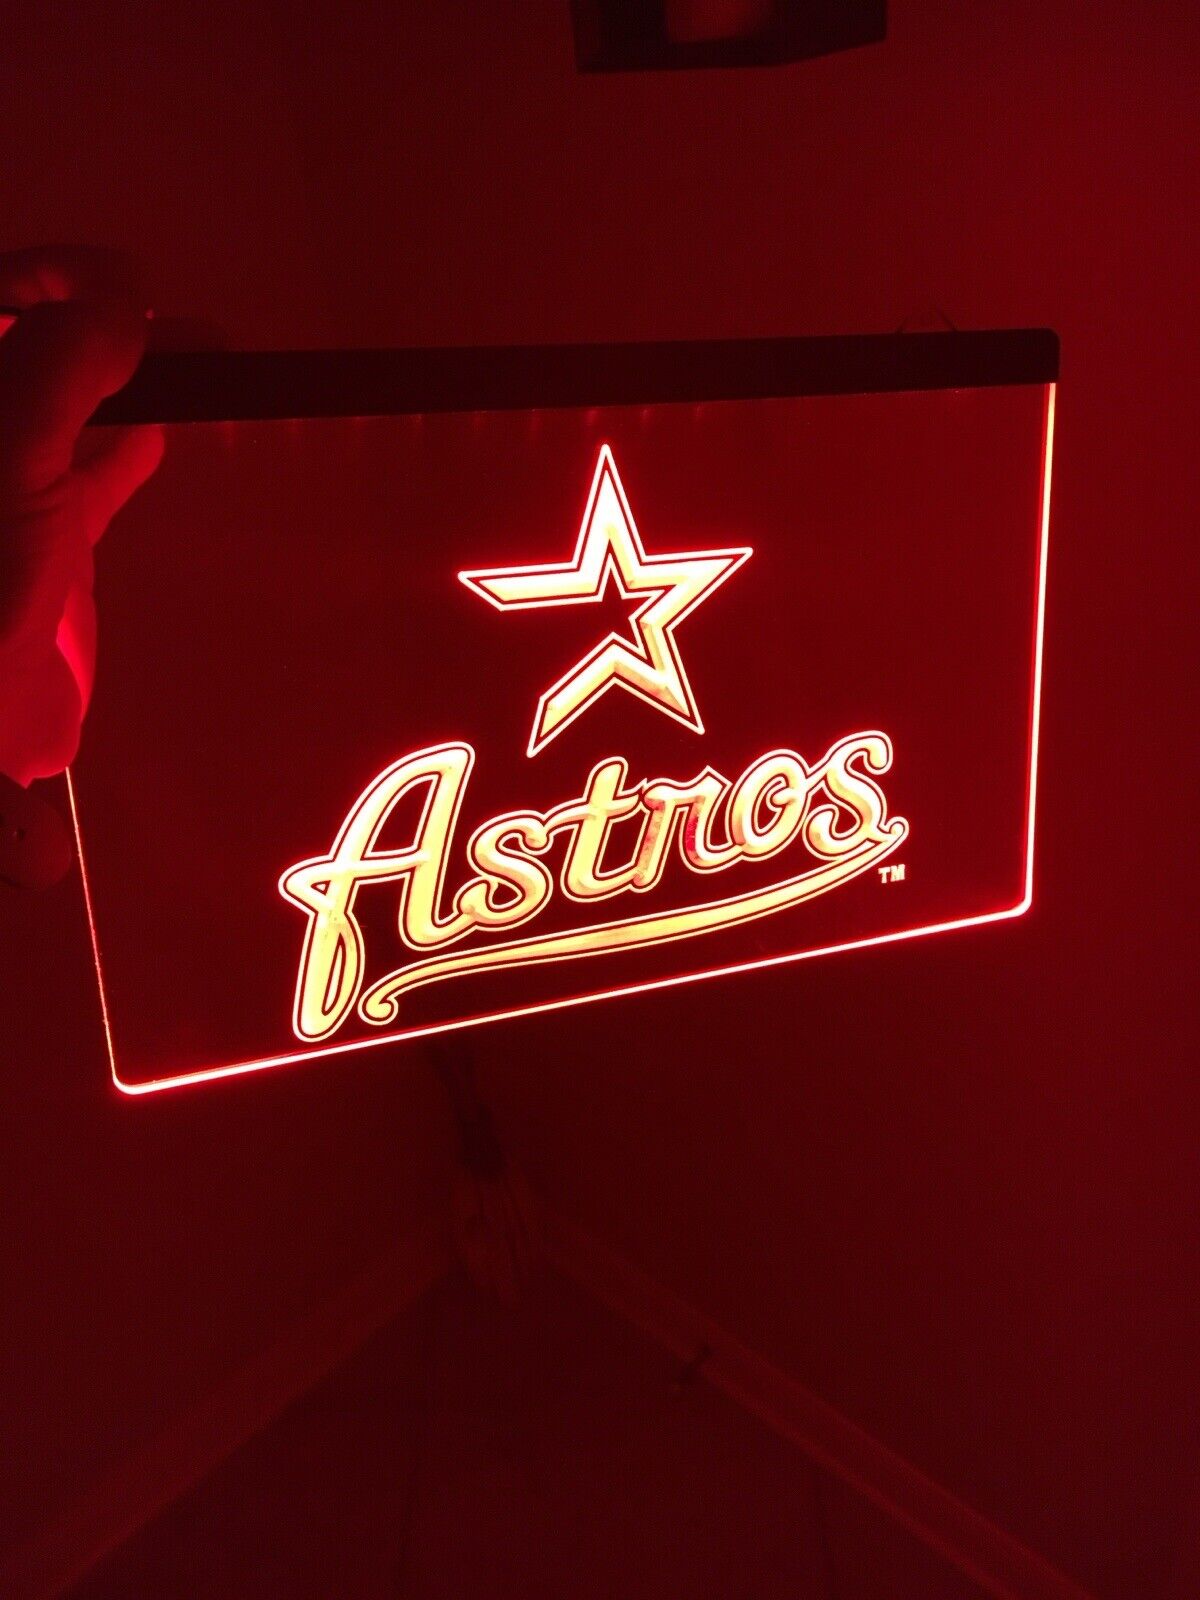 MLB Houston Astros LED light Neon Sign for Game Room,Office,Bar,Man Cave. NEW